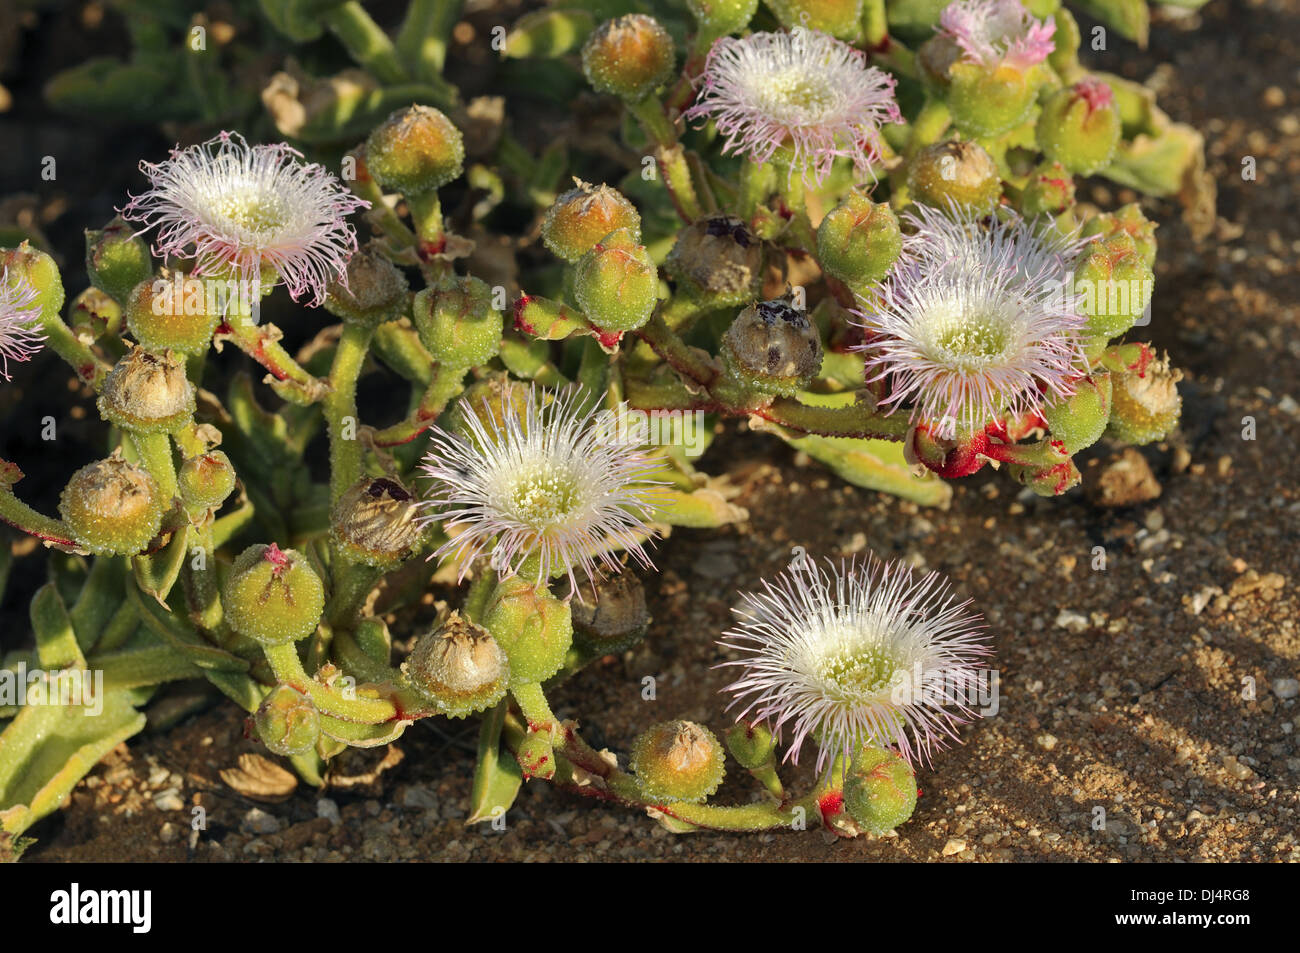 Mesmbryanthemum sp., Namaqualand, South Africa Stock Photo